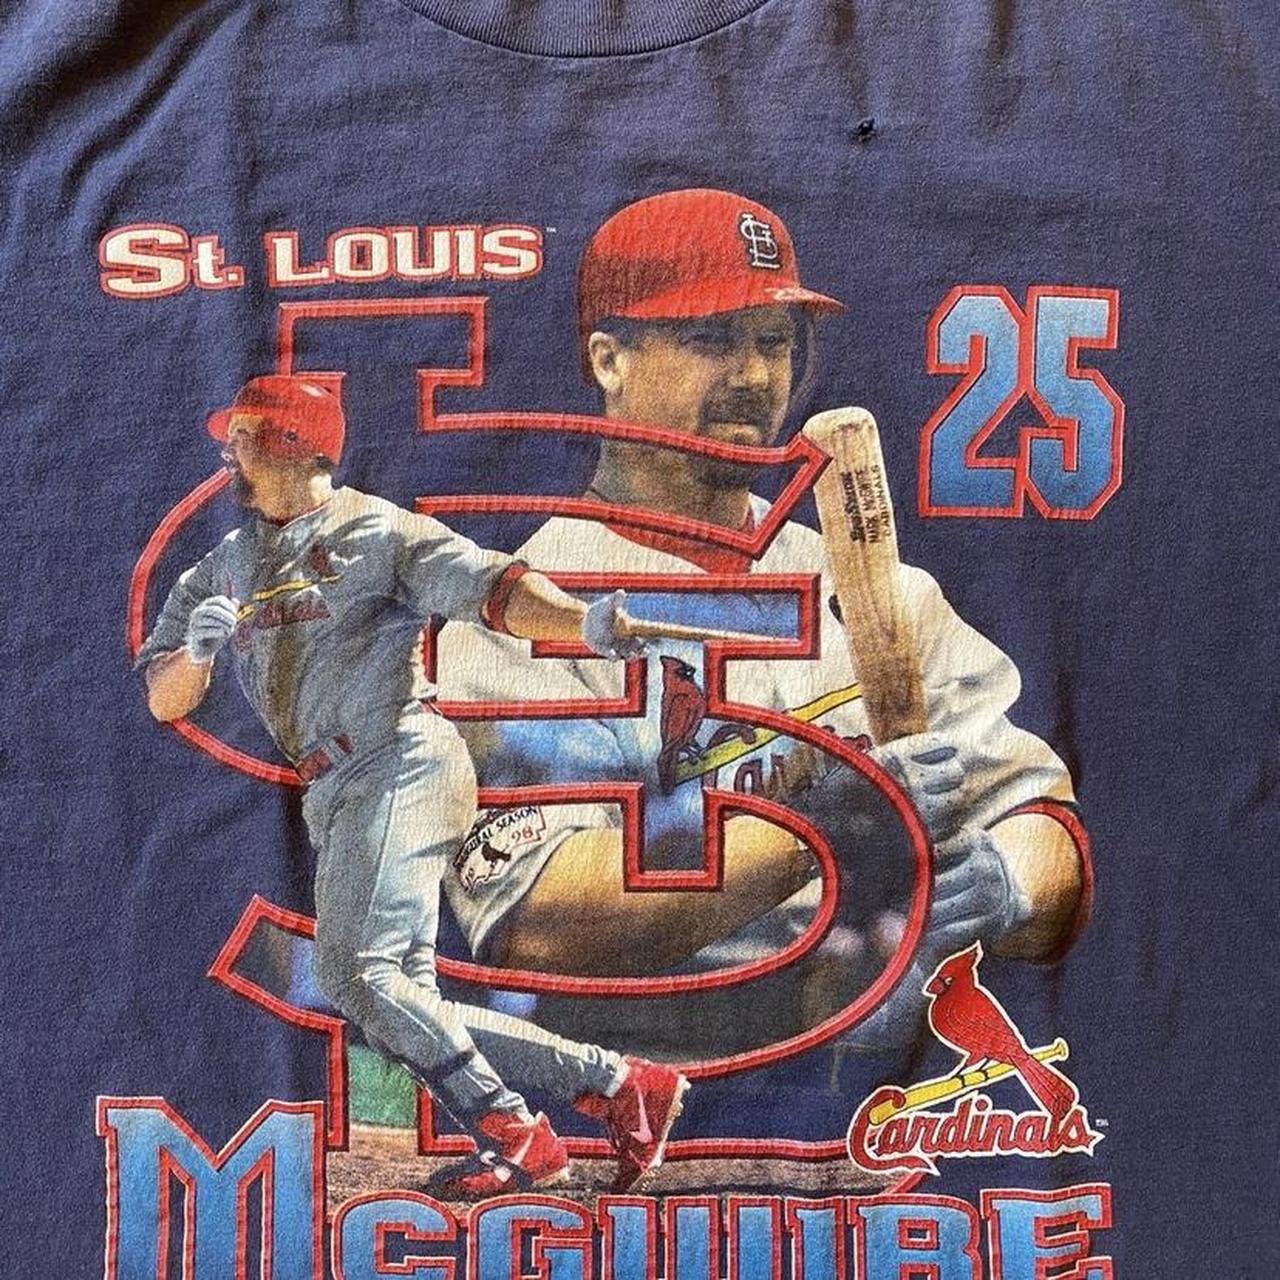 Vintage 90s St. Louis Cardinals MLB mark McGwire player T shirt mens XL